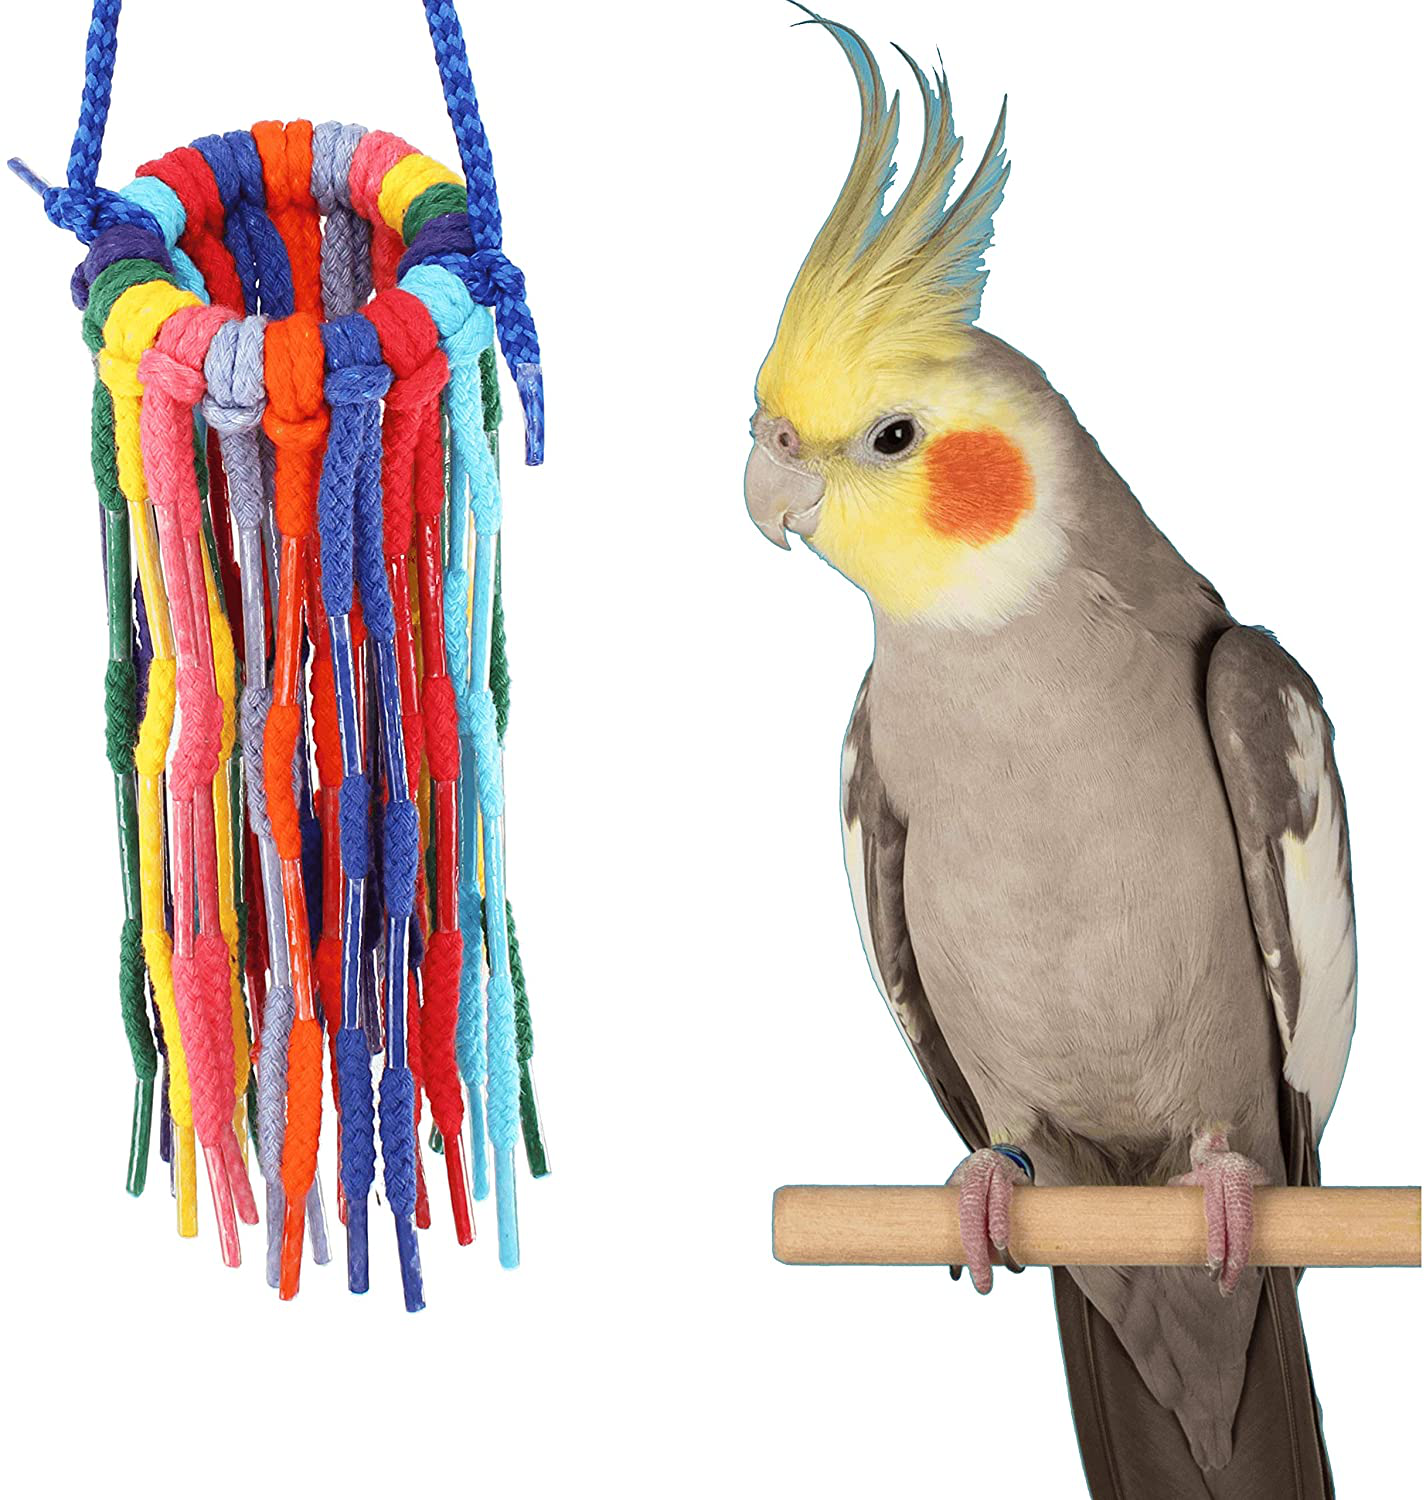 Bonka Bird Toys Aglet Cotton Colorful Chew Pull Parrot Parrotlet Quaker Budgie Finch Macaw Cockatoo Animals & Pet Supplies > Pet Supplies > Bird Supplies > Bird Toys Bonka Bird Toys   